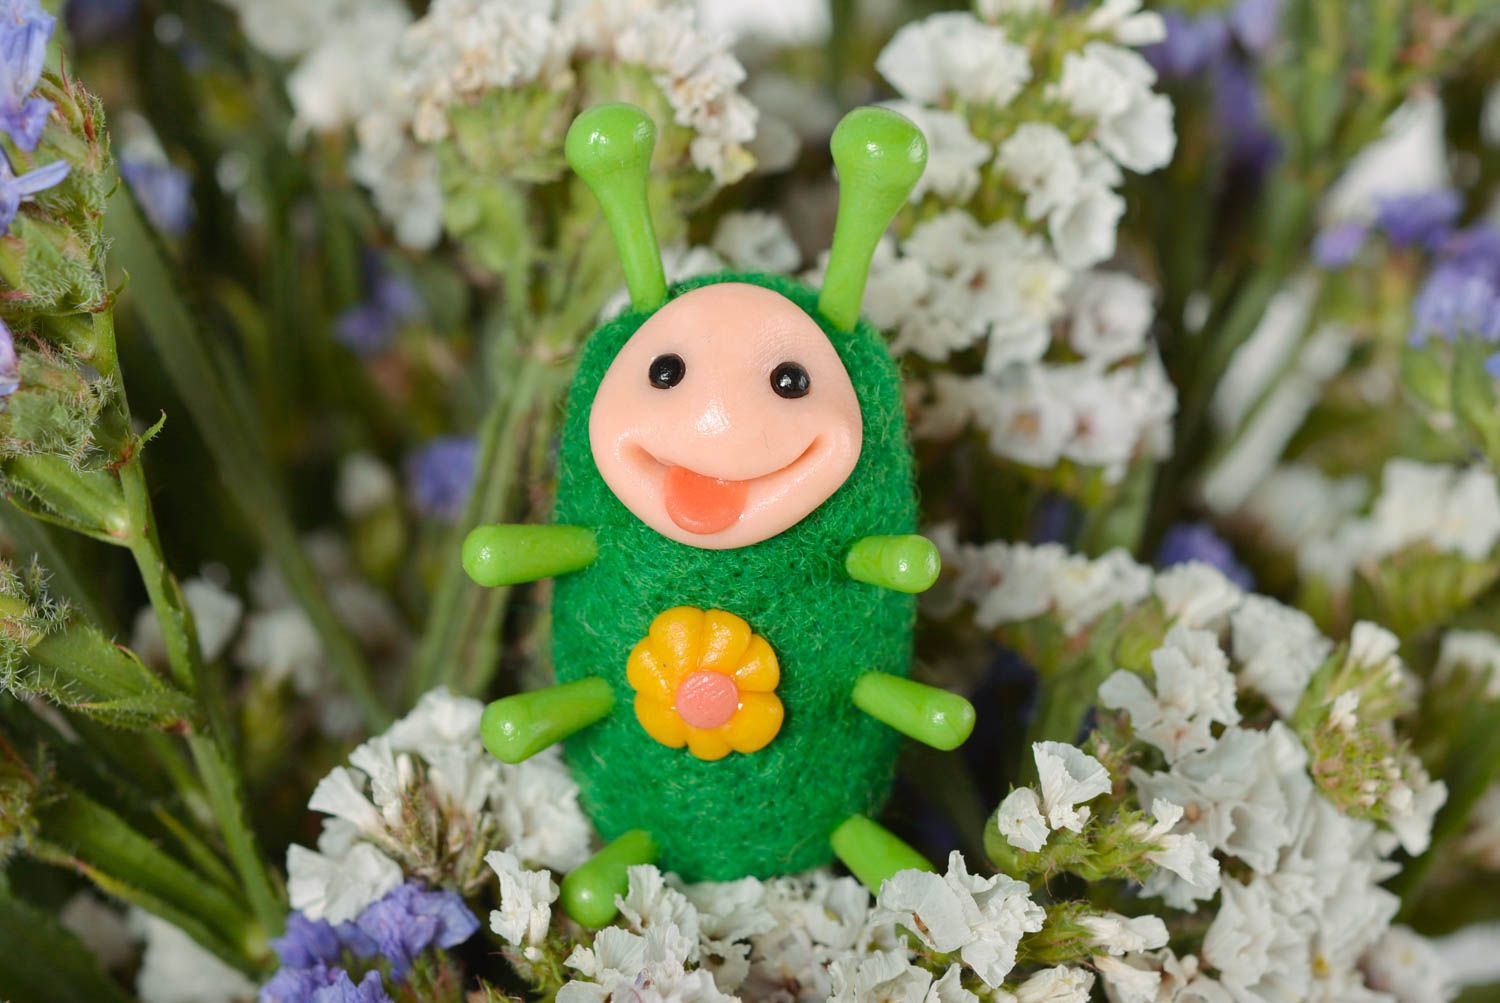 Handmade woolen green toy plastic designer figurine stylish statuette photo 3